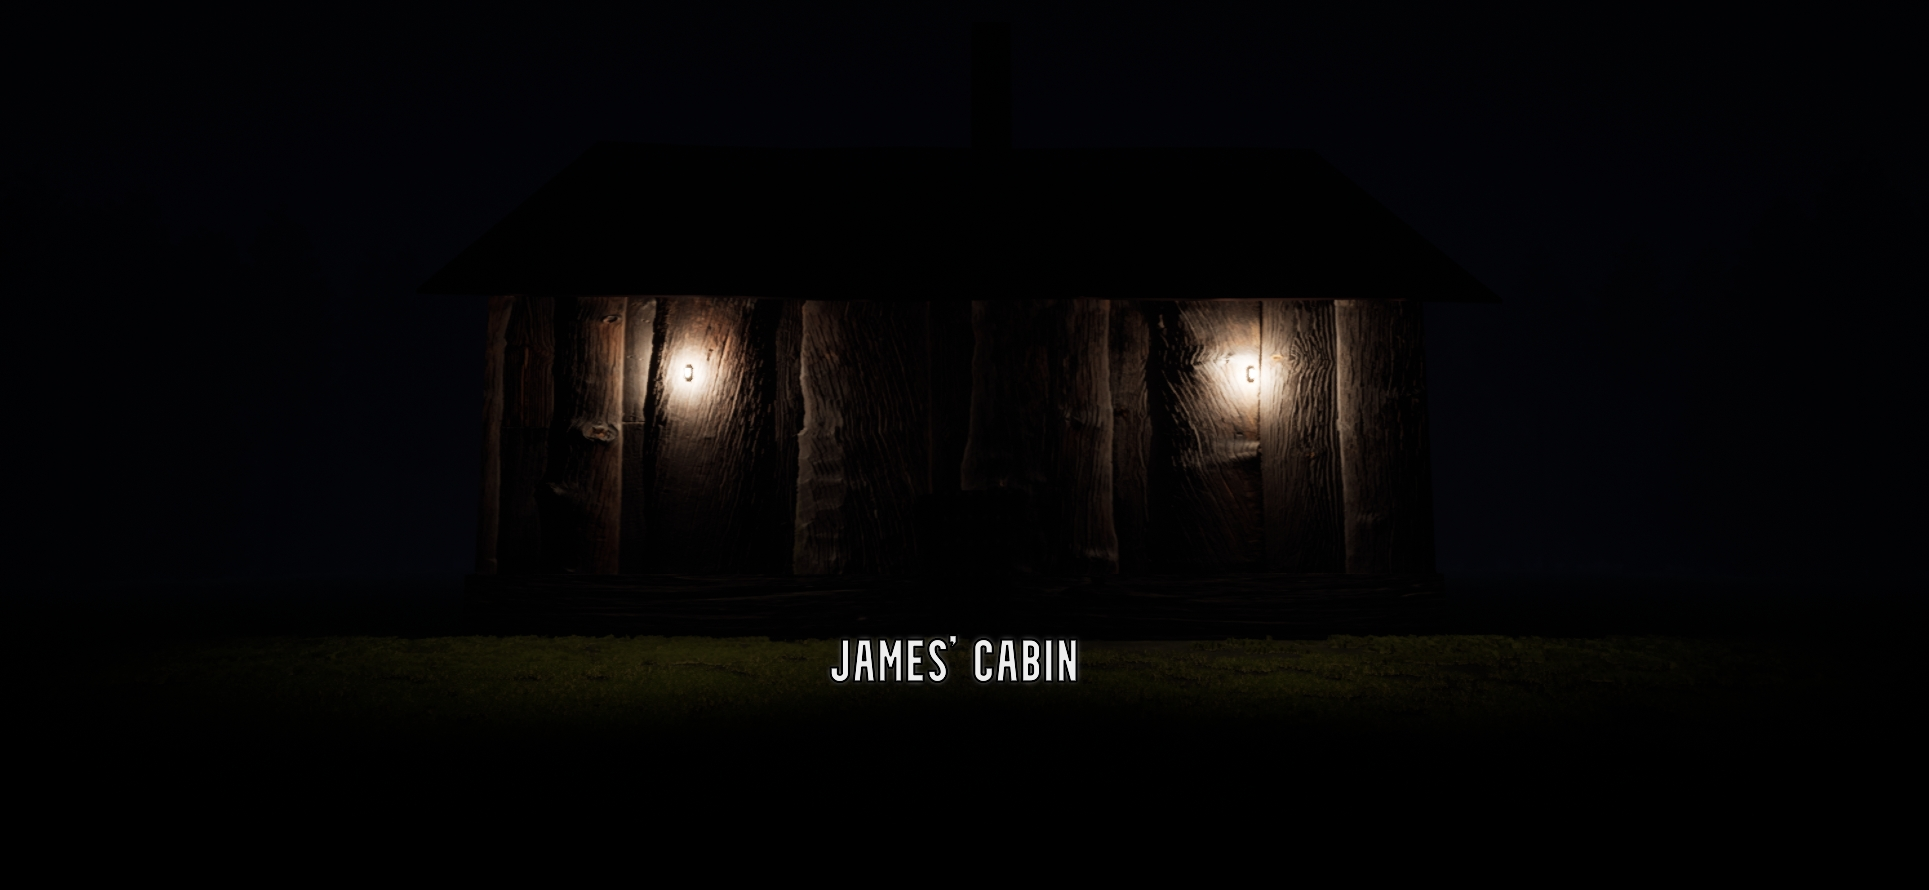 James' Cabin